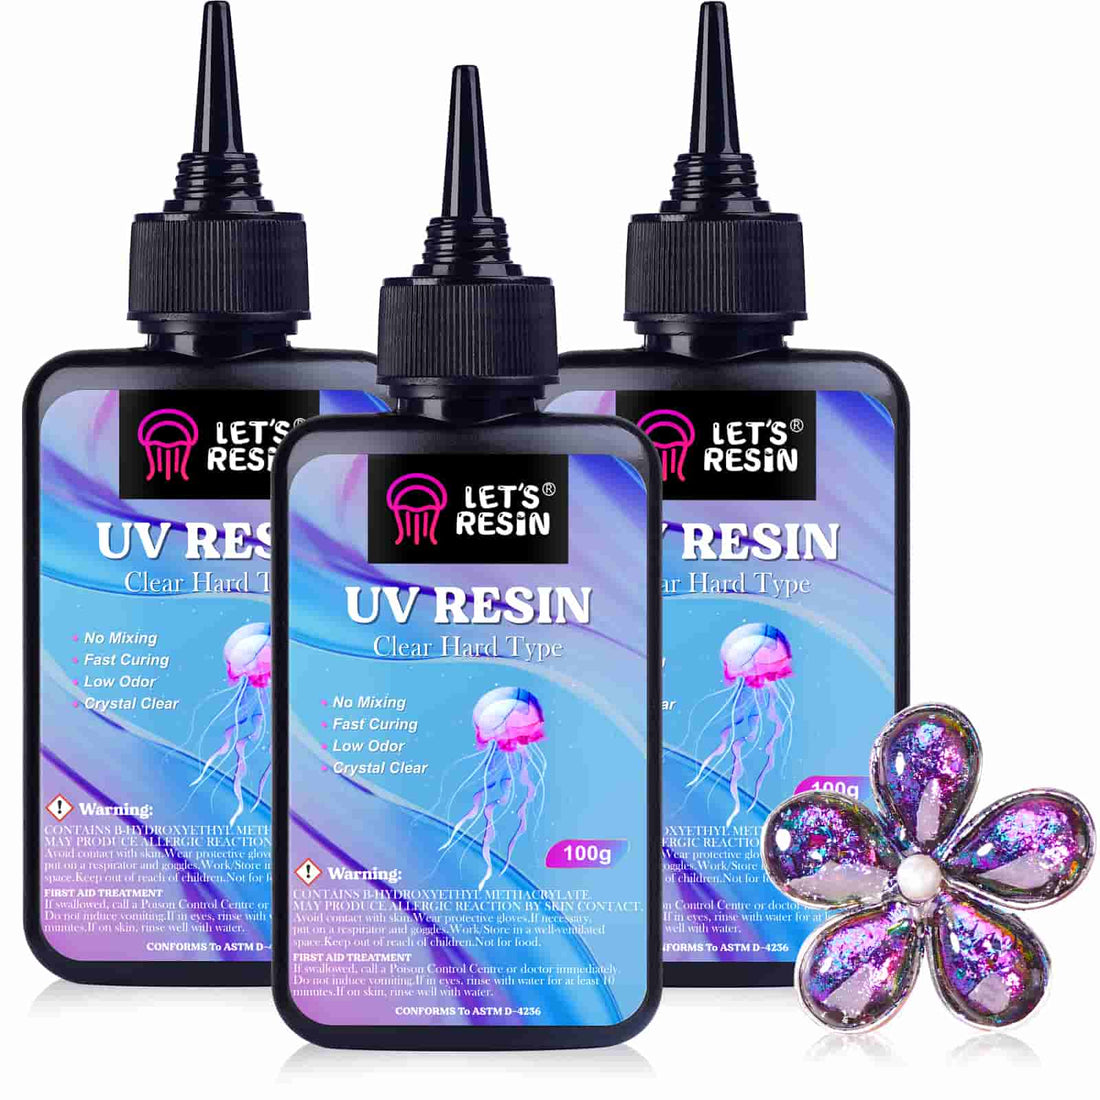 New Let's Resin Double UV Lamp Unsponsored Review 📝Tiny UV Resin